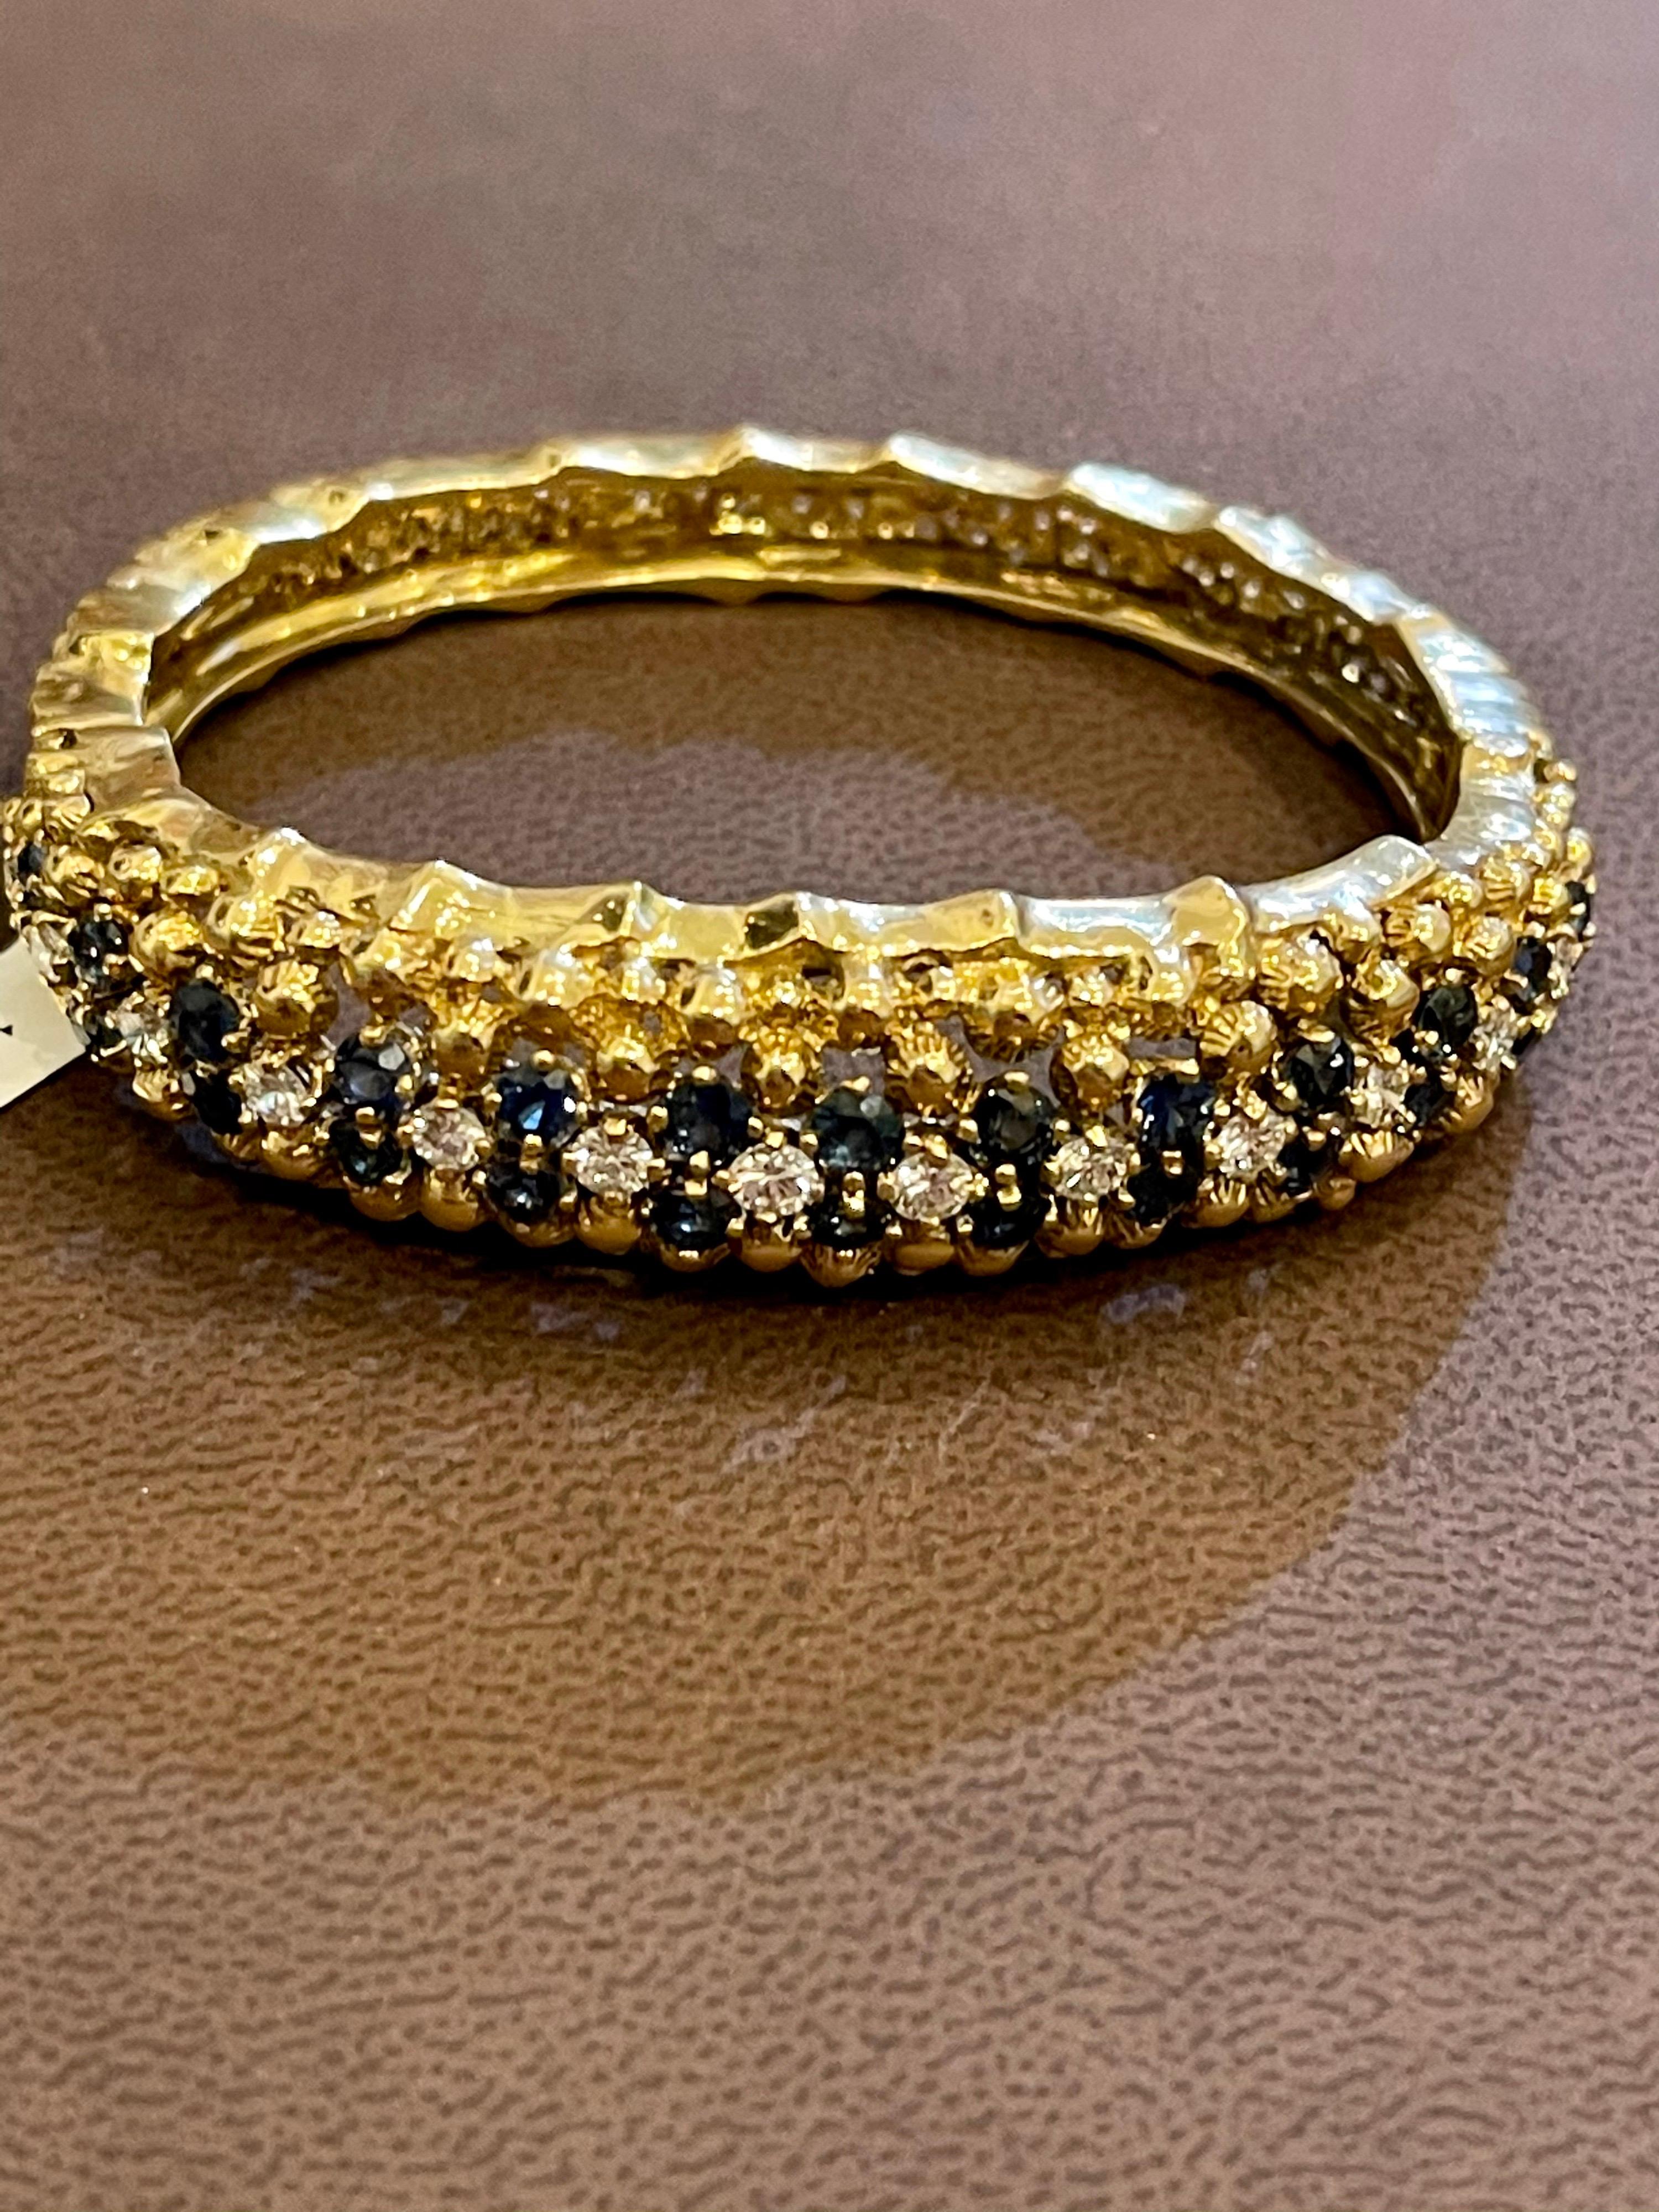 5 Carat Sapphire and 1.5 Carat Diamond Cuff Bangle Bracelet in 18 Karat Gold For Sale 1